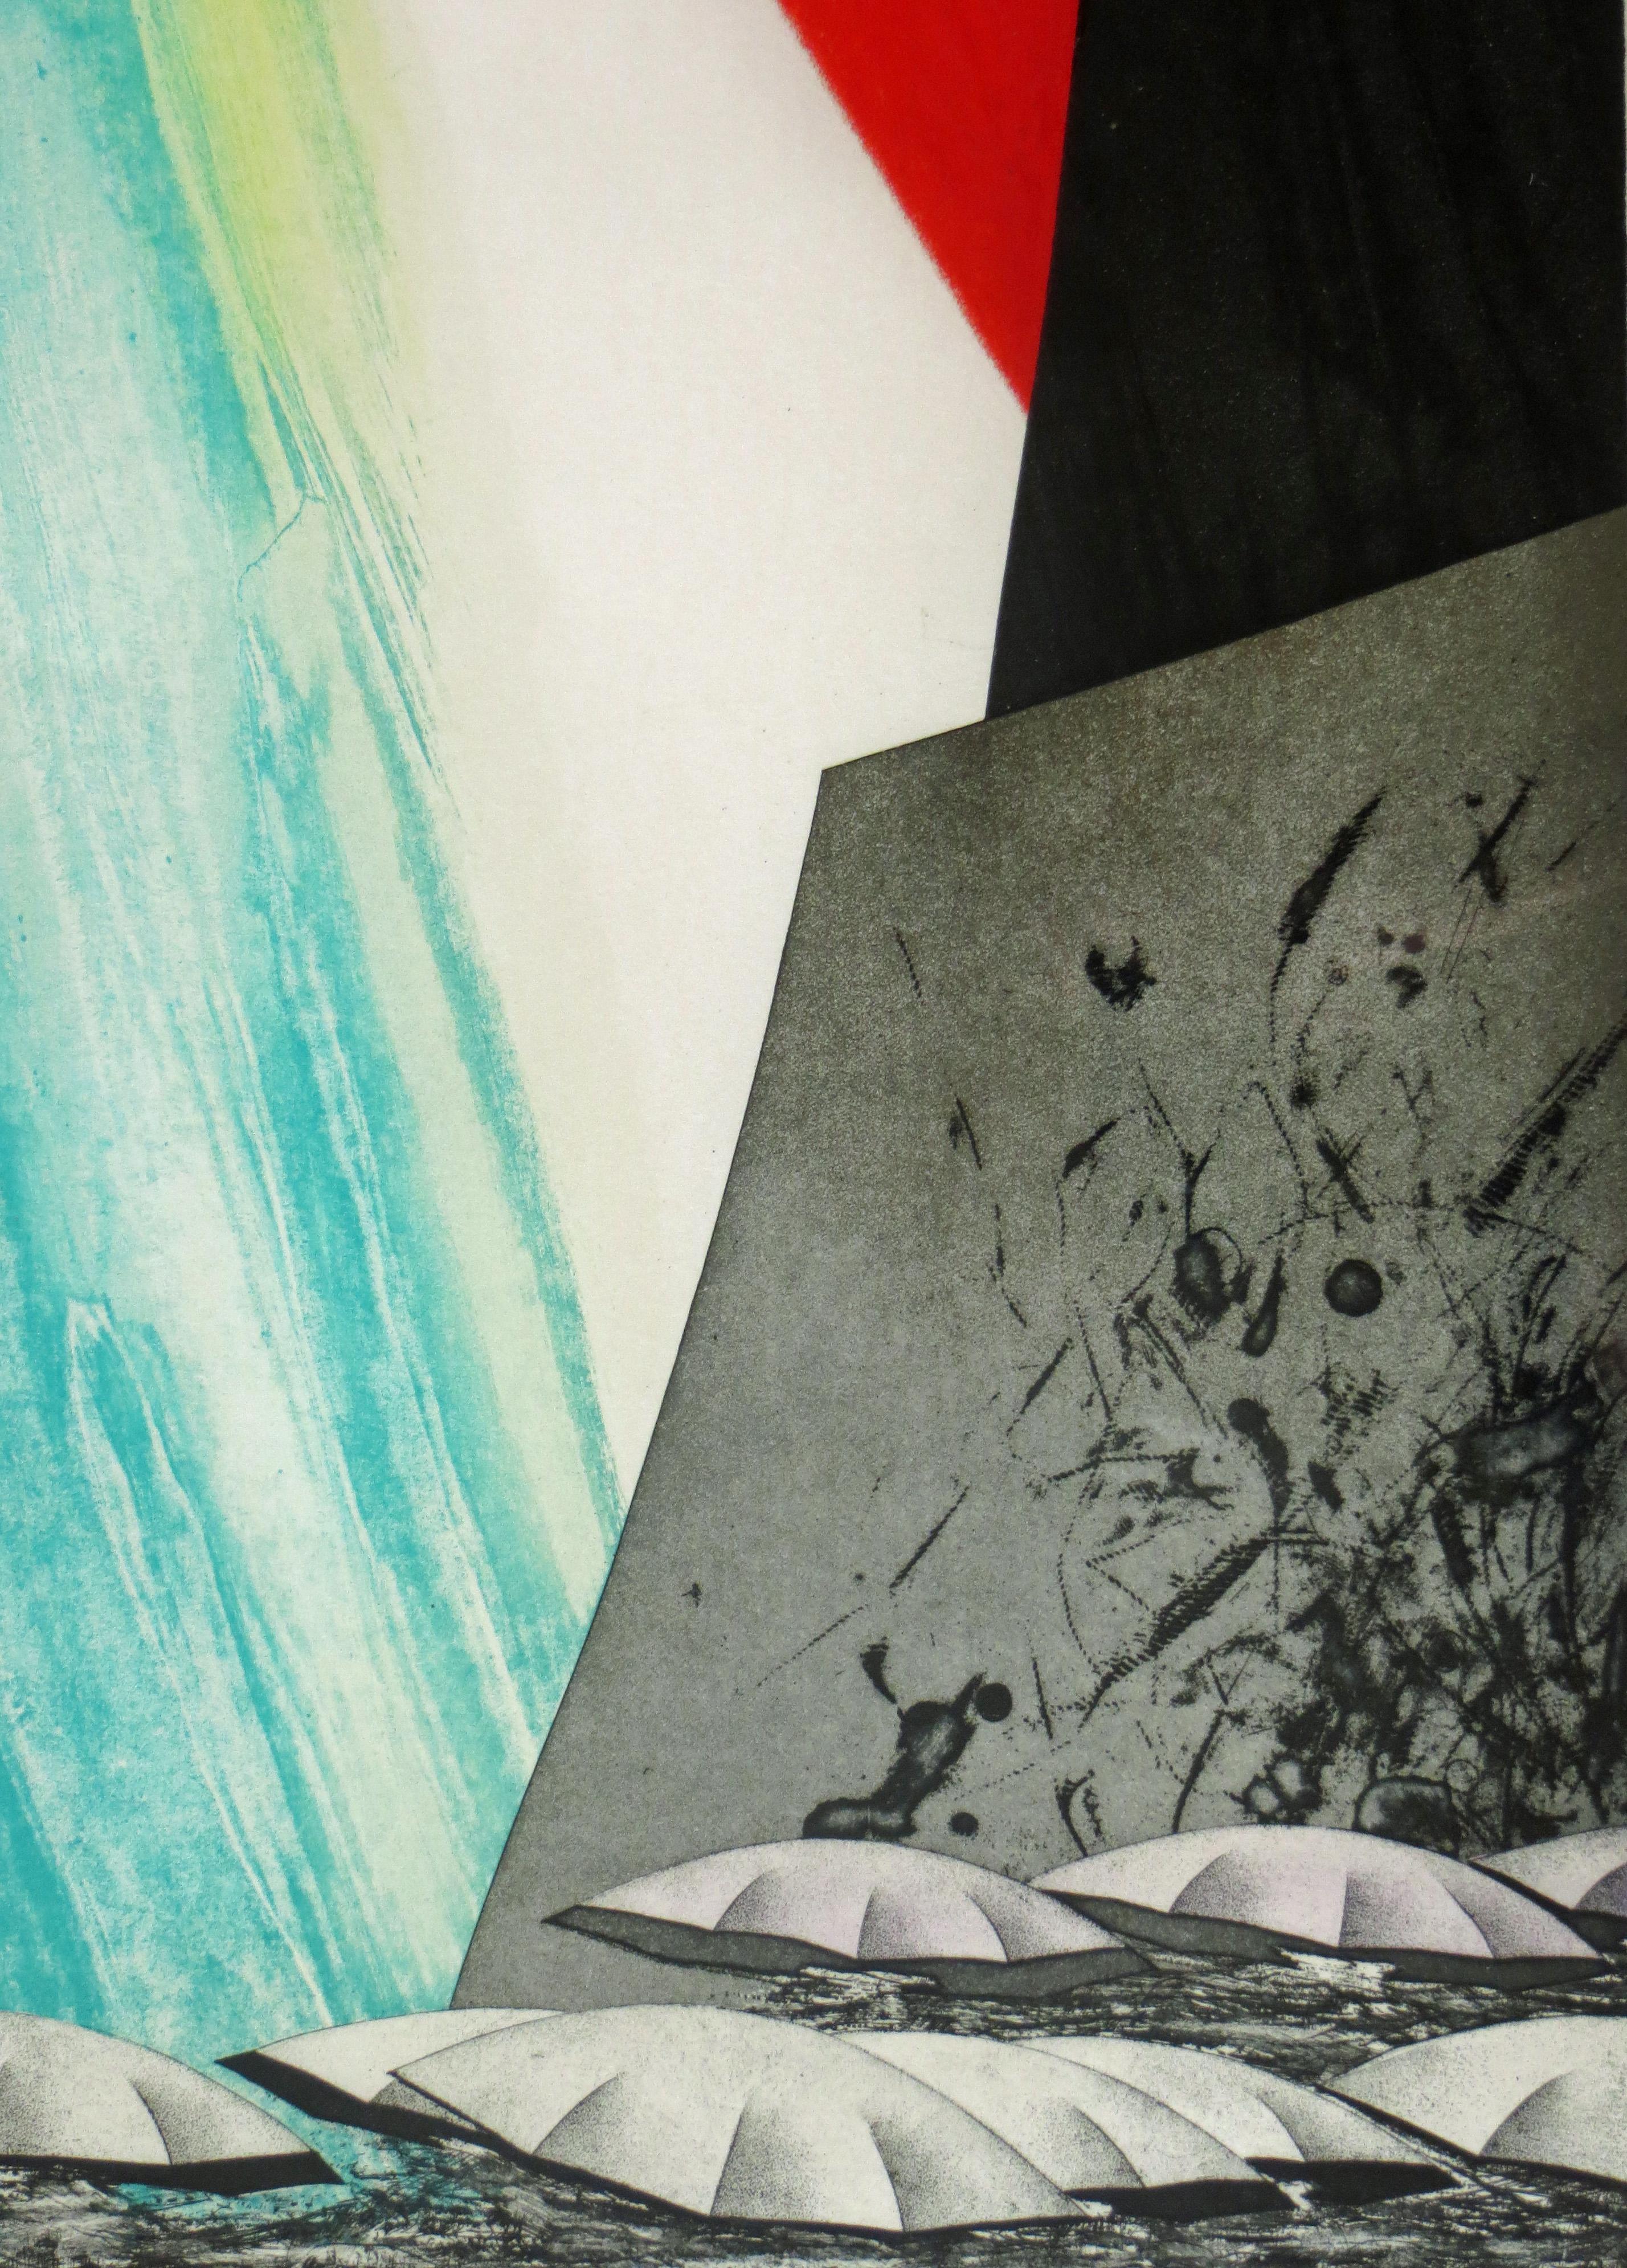 Artist: Shigeki Kuroda – Japanese (1953- )
Title: Solstice
Year: circa 1990
Medium: soft ground etching and aquatint
Sight size: 23.25 x 14 inches (59.0 x 35.5 cm)  
Sheet size: 29.5 x 21 inches (76.5 x 53.0 cm)
Framed size: 34.75 x 24 inches (88 x